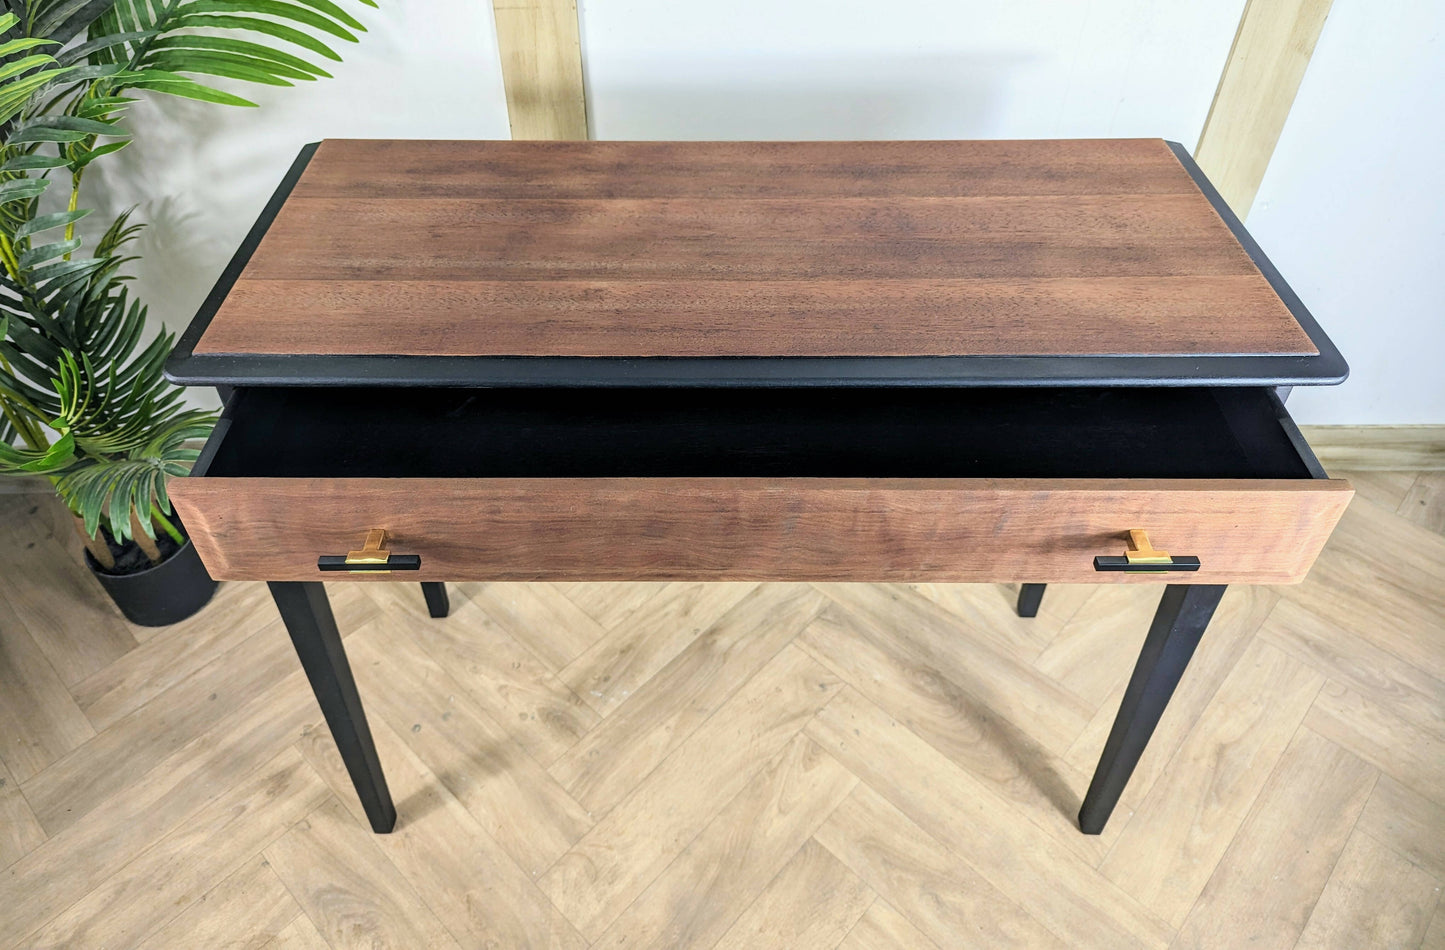 Stag minstrel black console table/desk